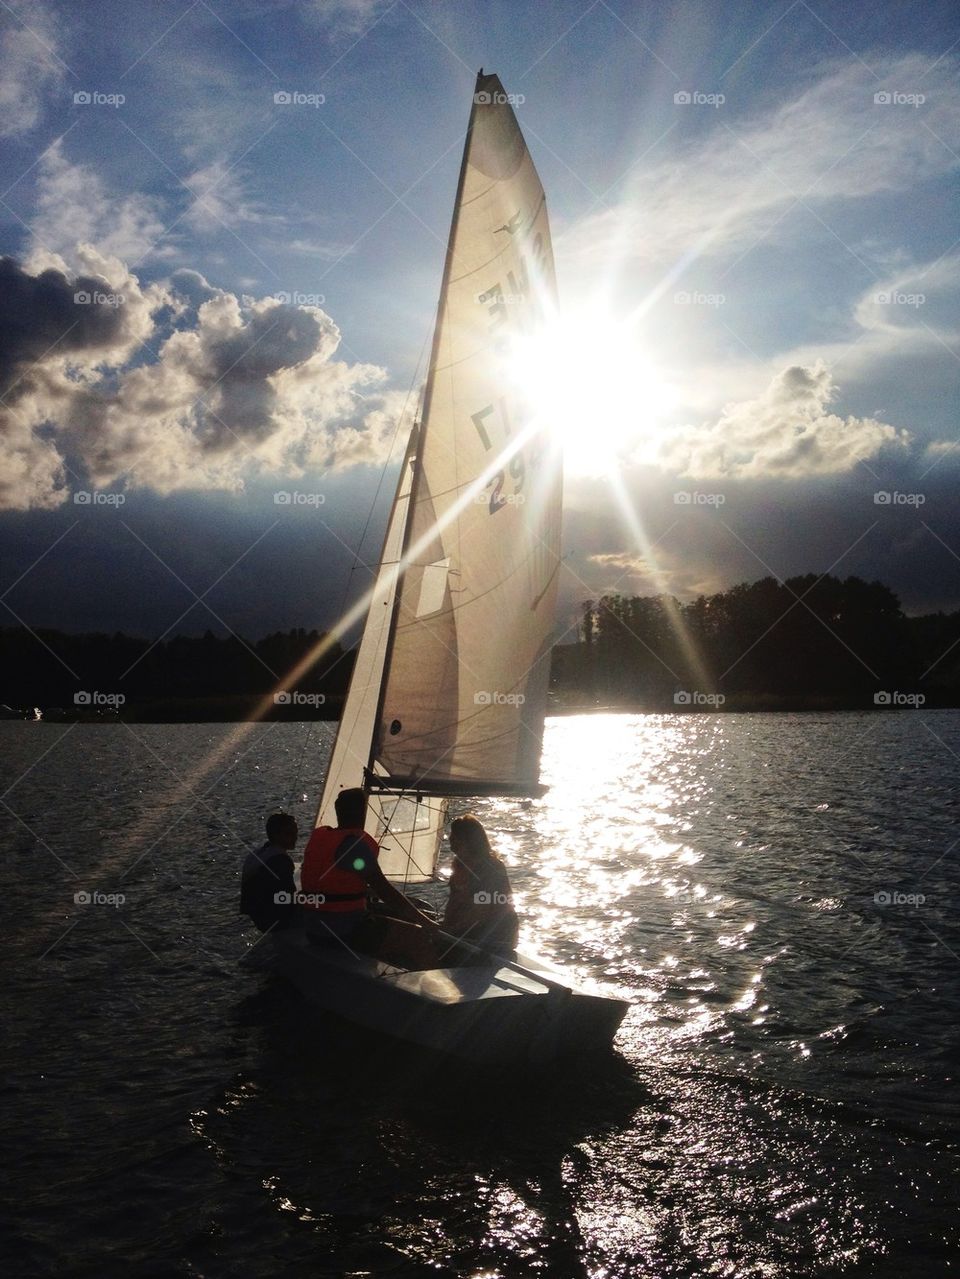 Evening sailing in Stockholm's archipelago